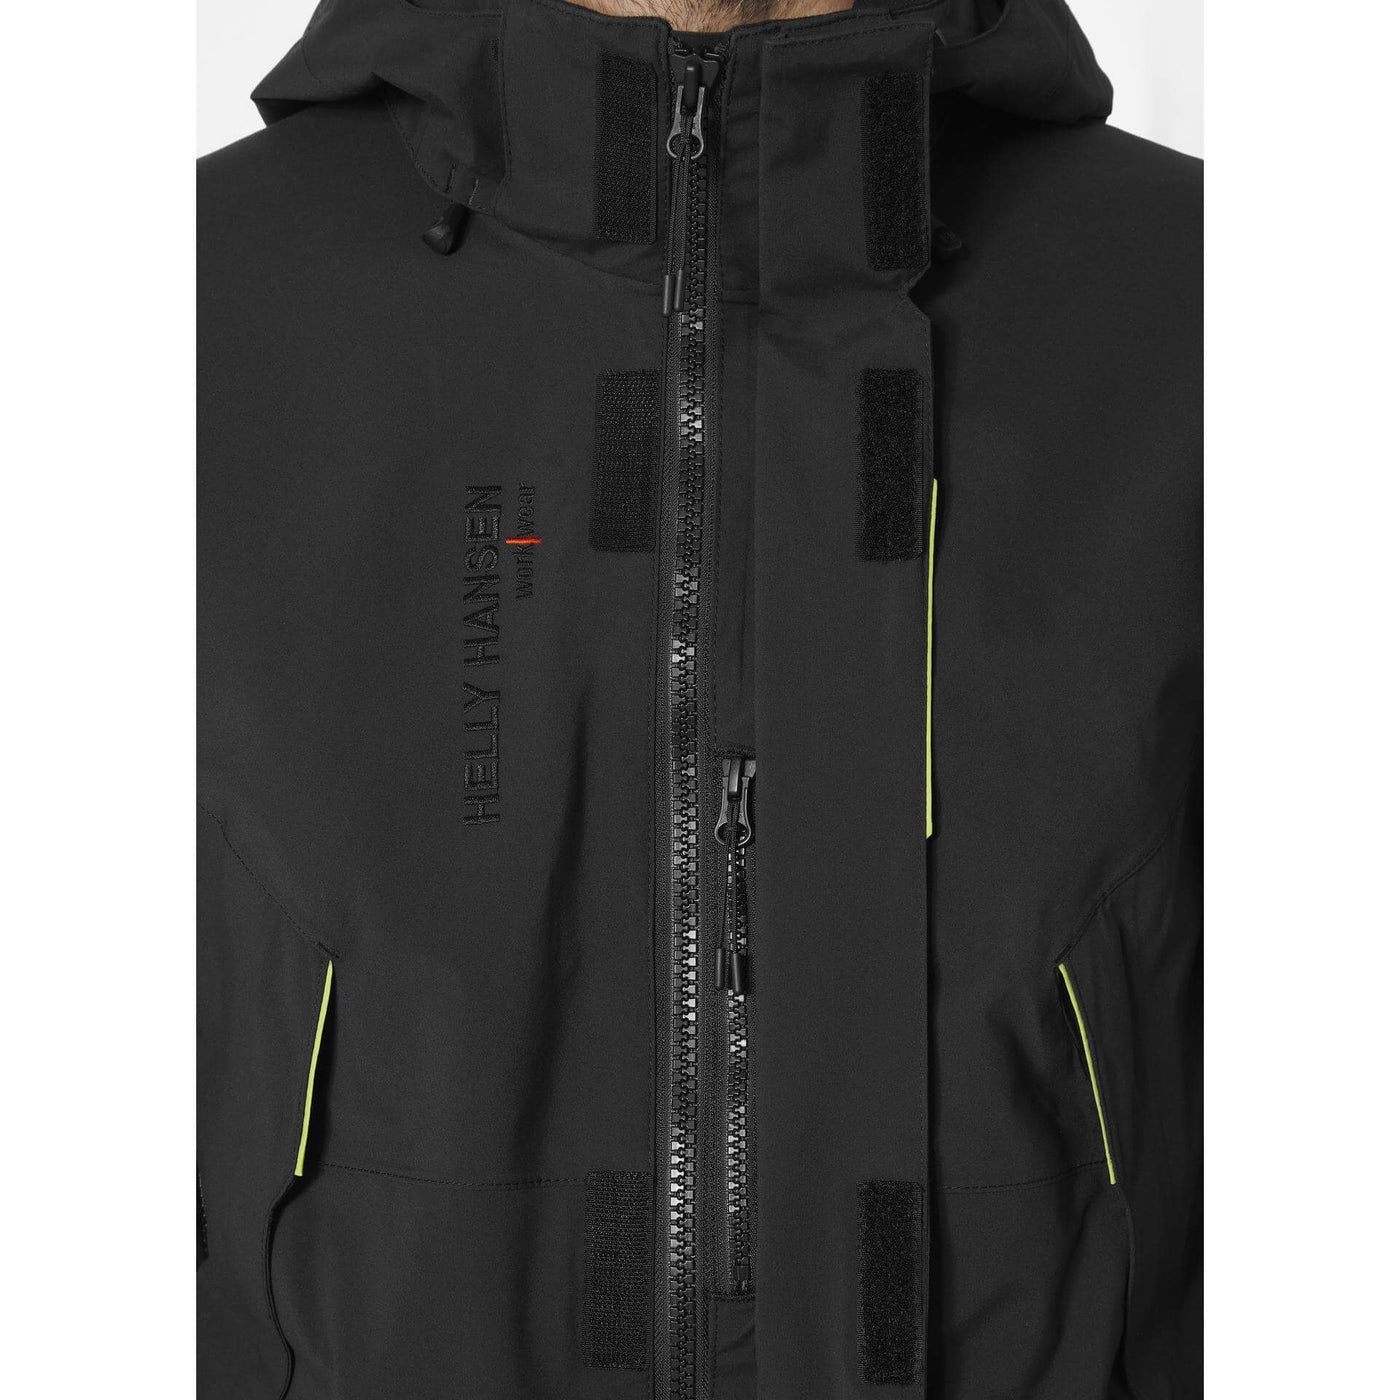 Helly Hansen Magni Evolution Waterproof Shell Jacket Black Feature 4#colour_black